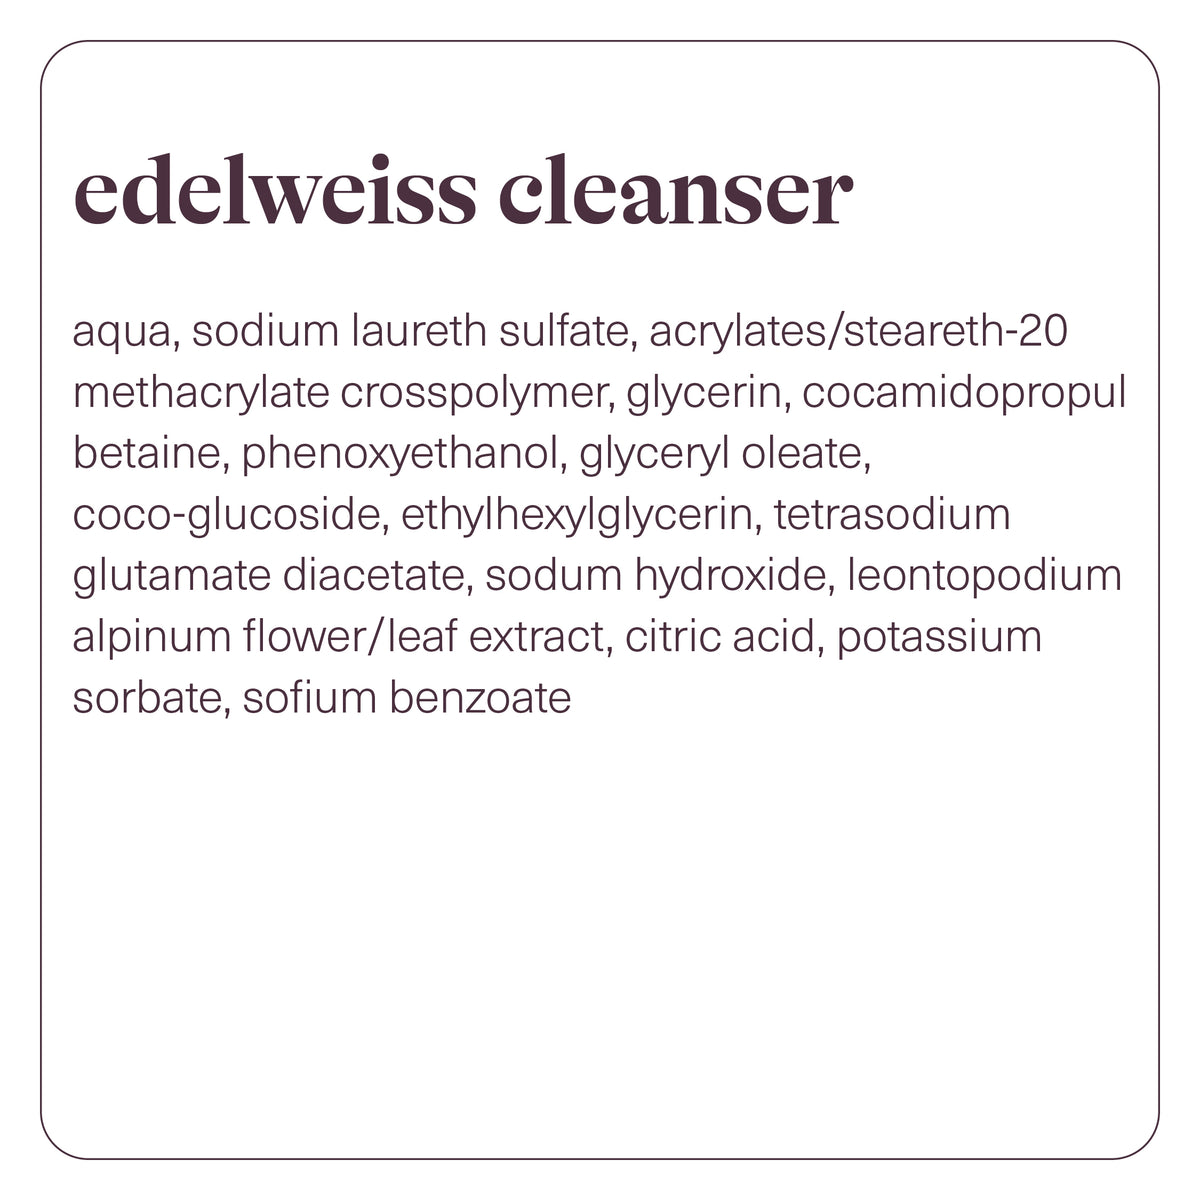 Edelweiss Cleanser